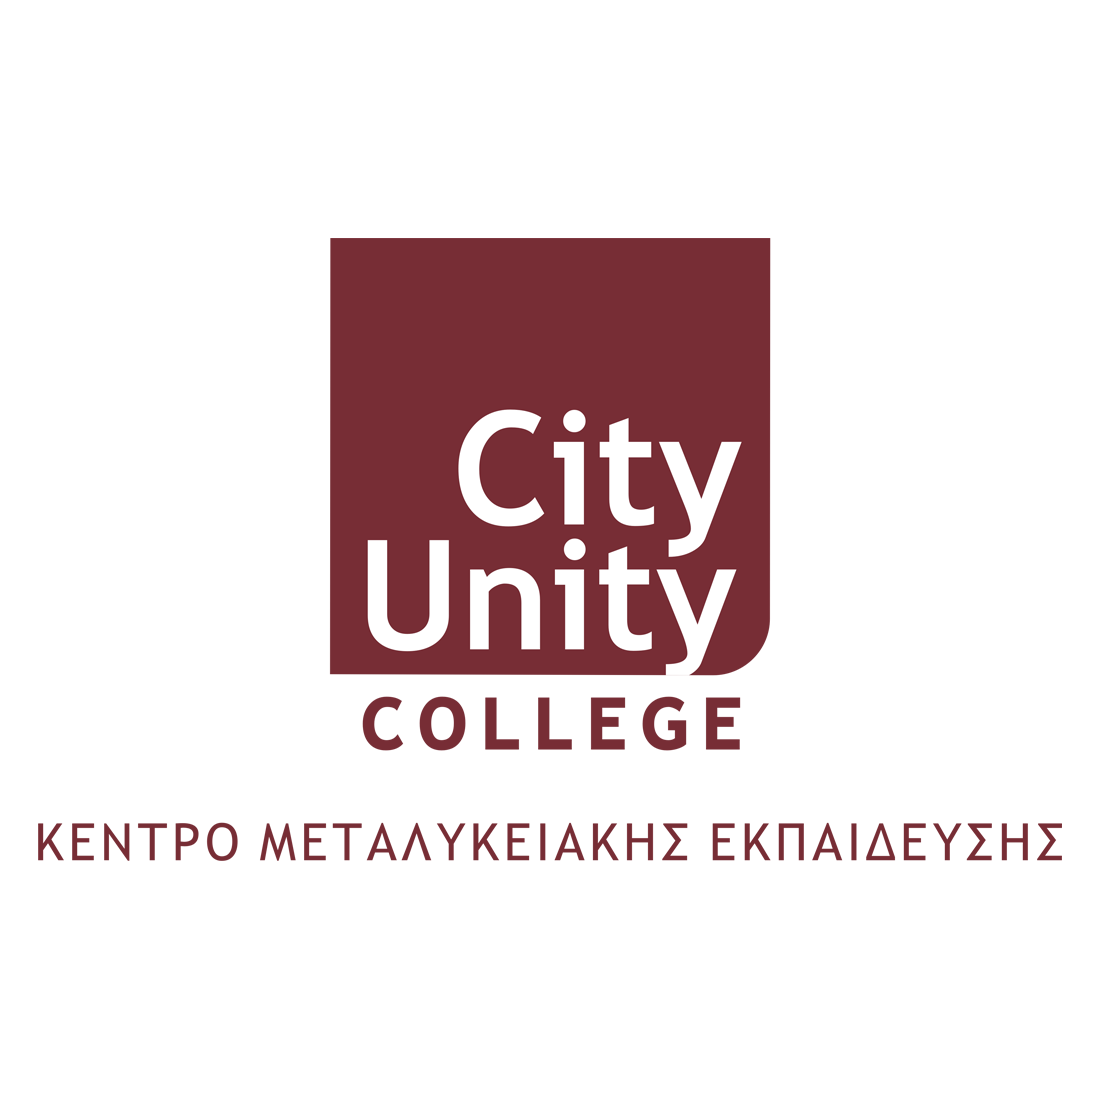 City Unity College, πλήρως προσαρμόσιμο Bachelor και ΜΒΑ